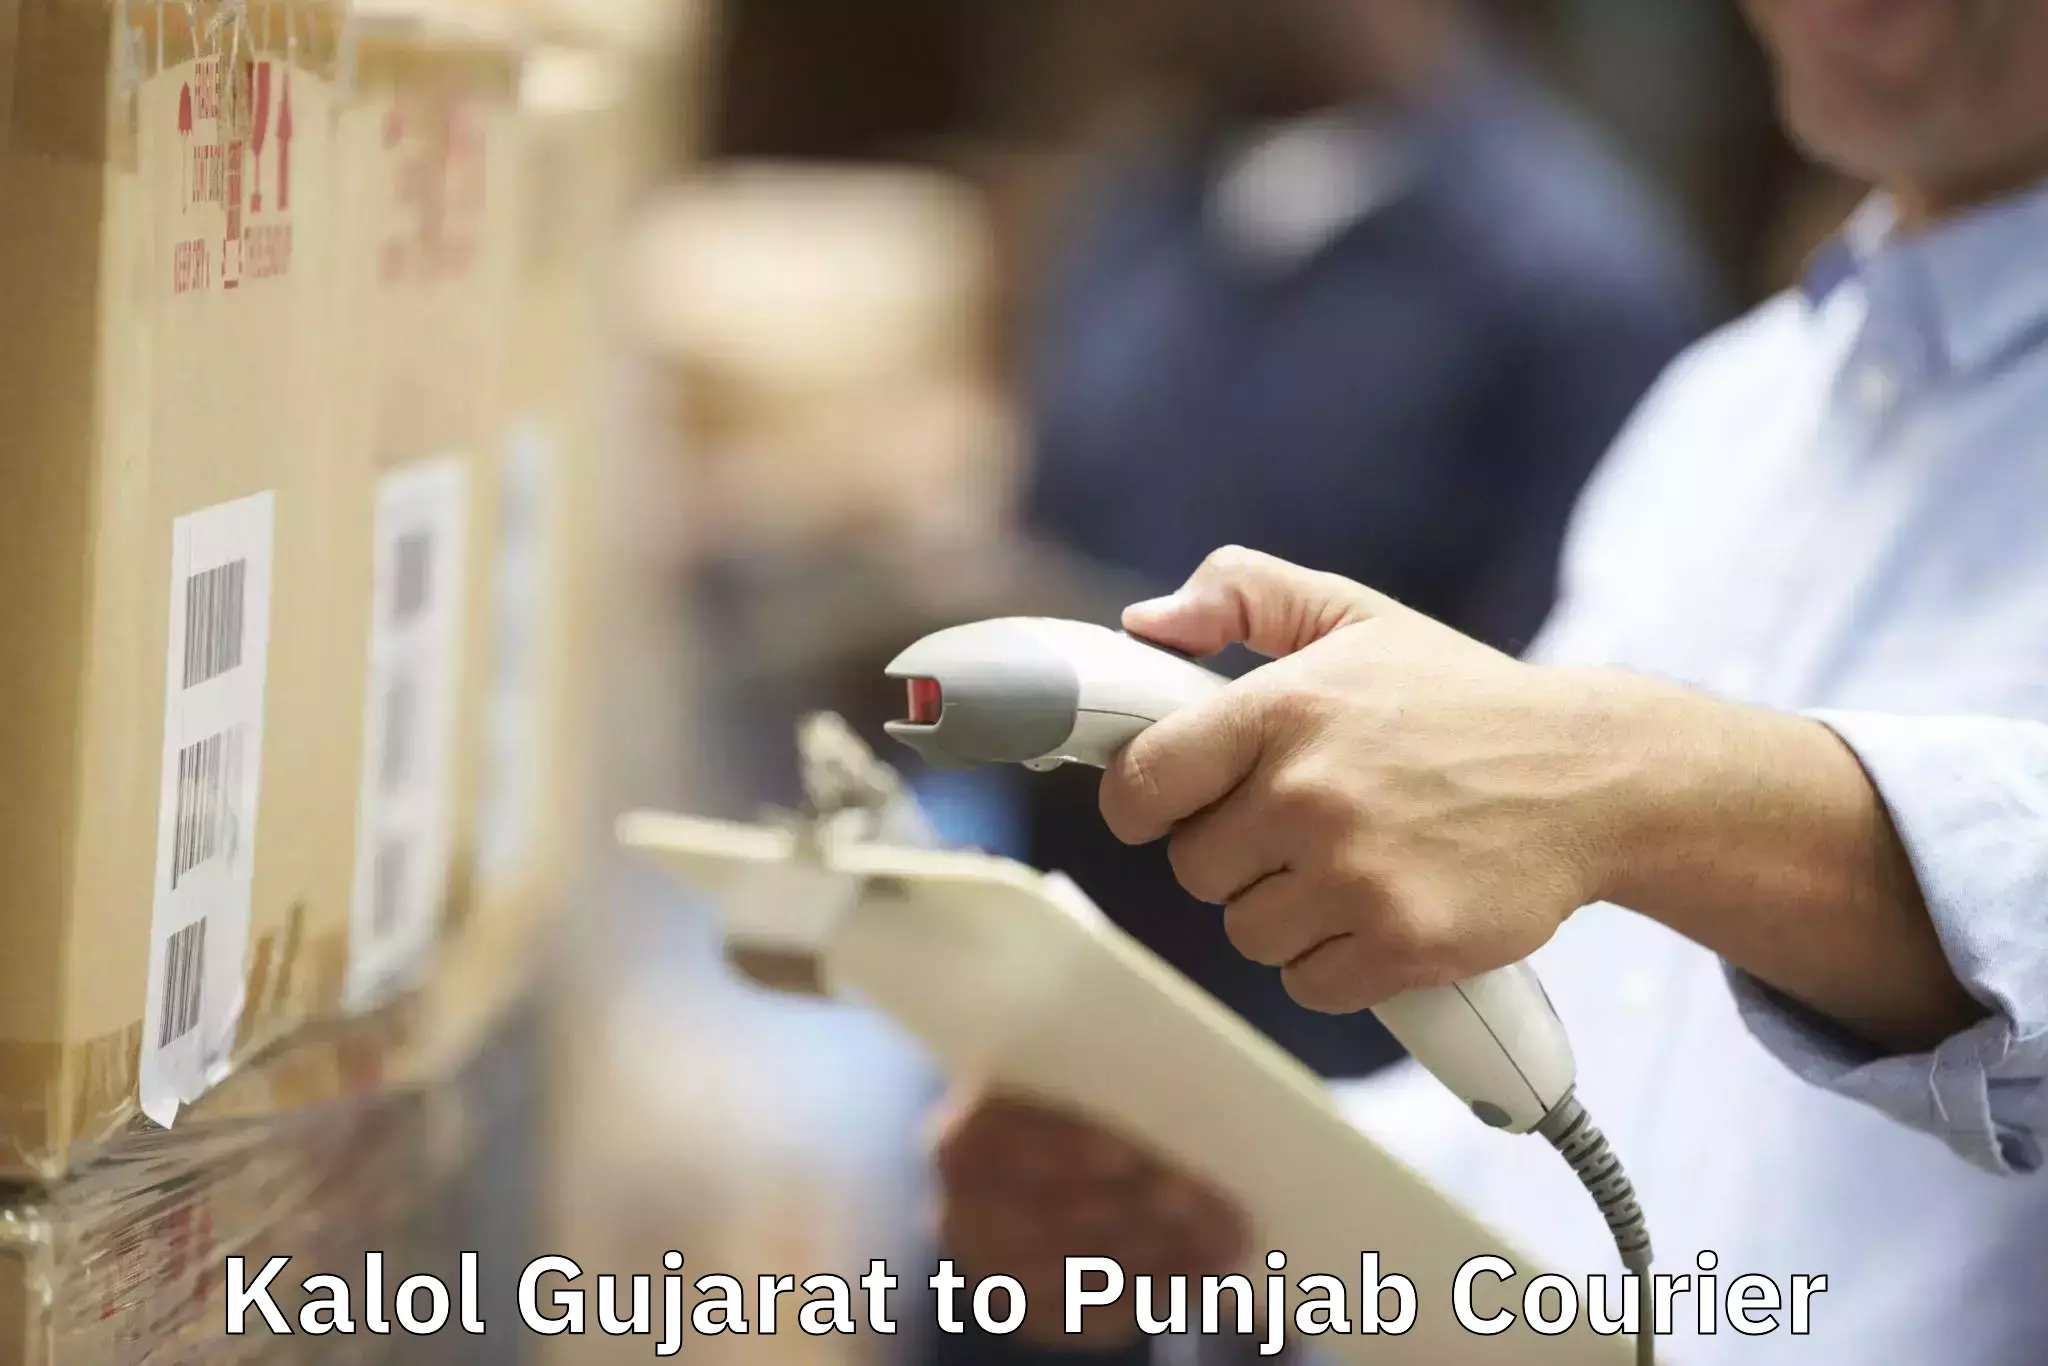 Reliable movers Kalol Gujarat to Amritsar